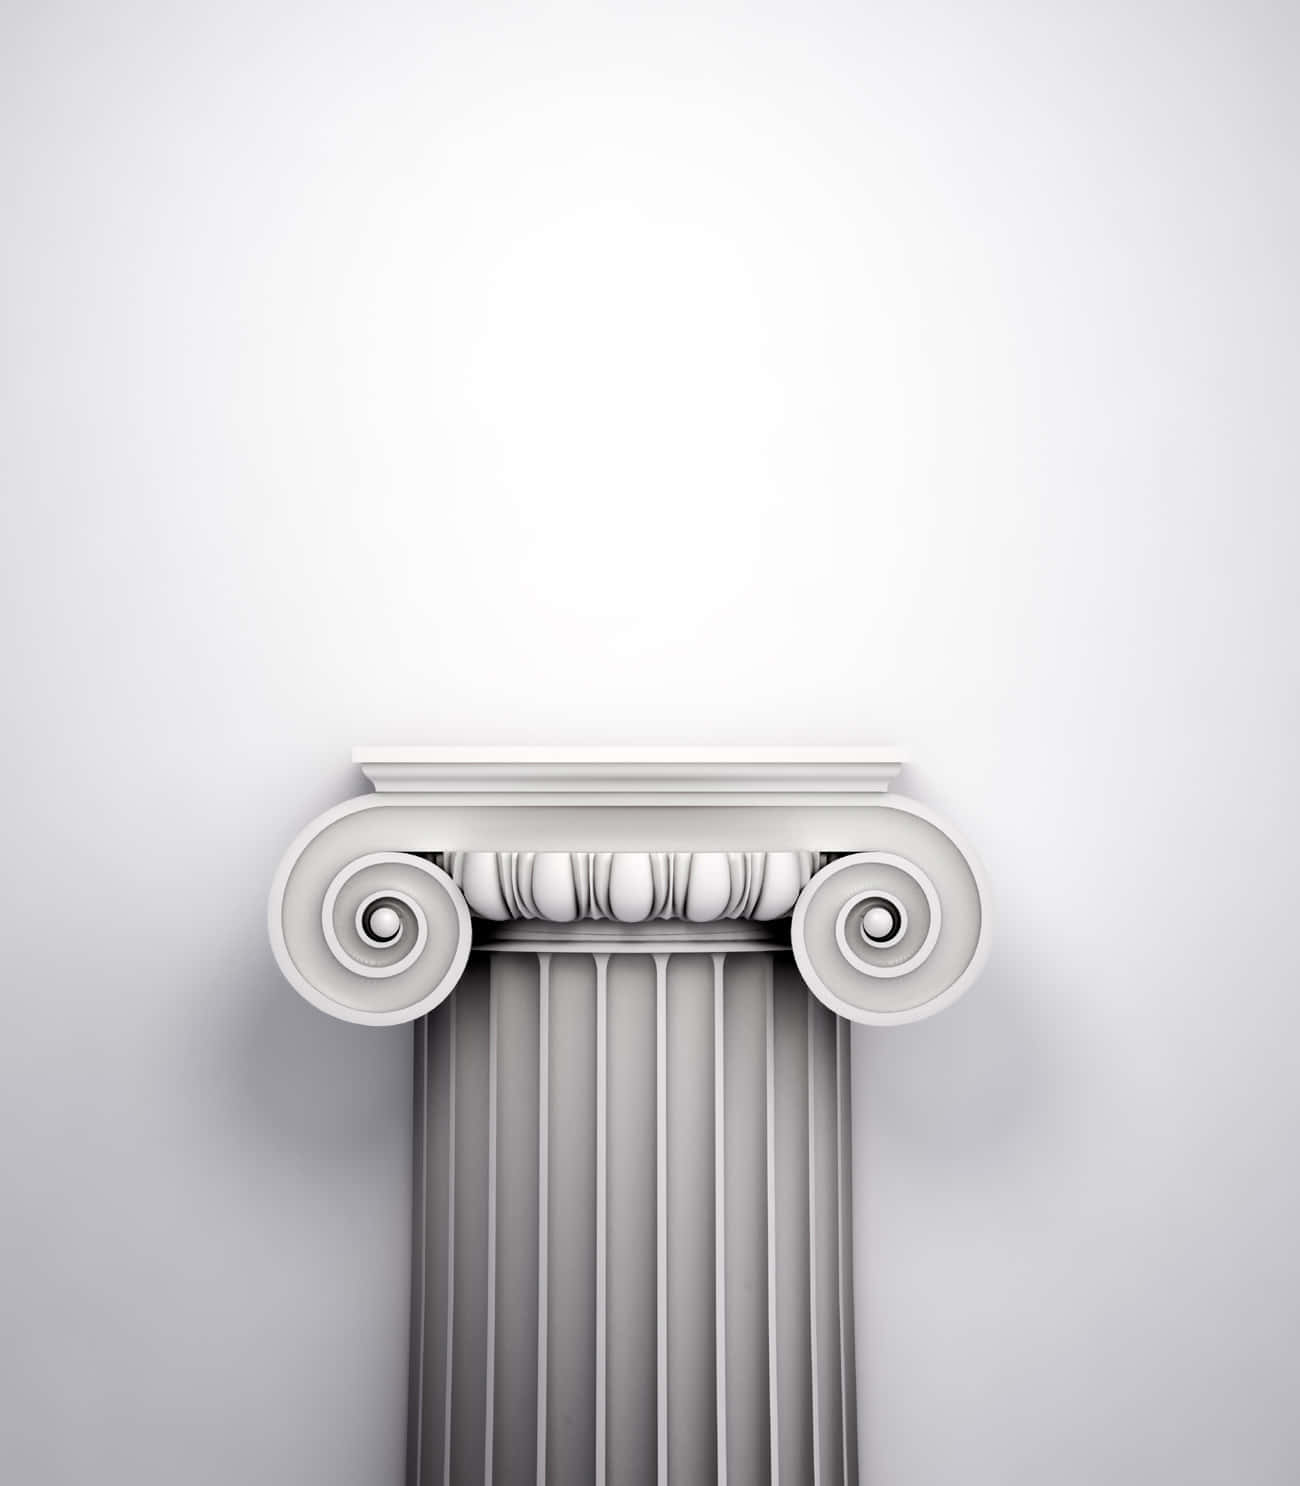 13 Pillar design ideas | background design, pillar design, photoshop  backgrounds free